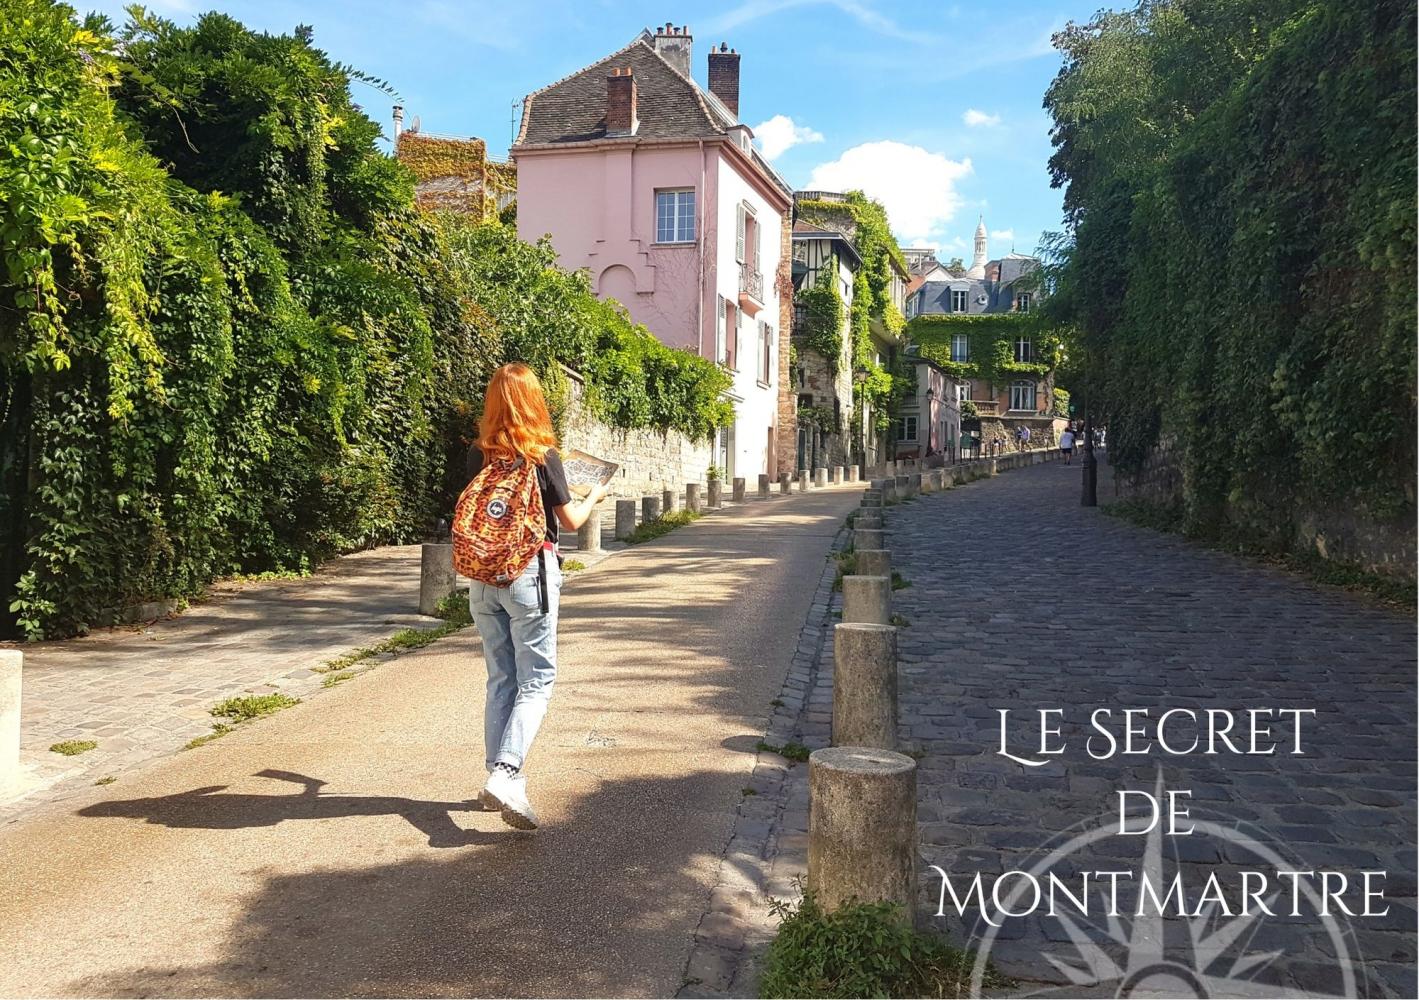 The Secret of Montmartre